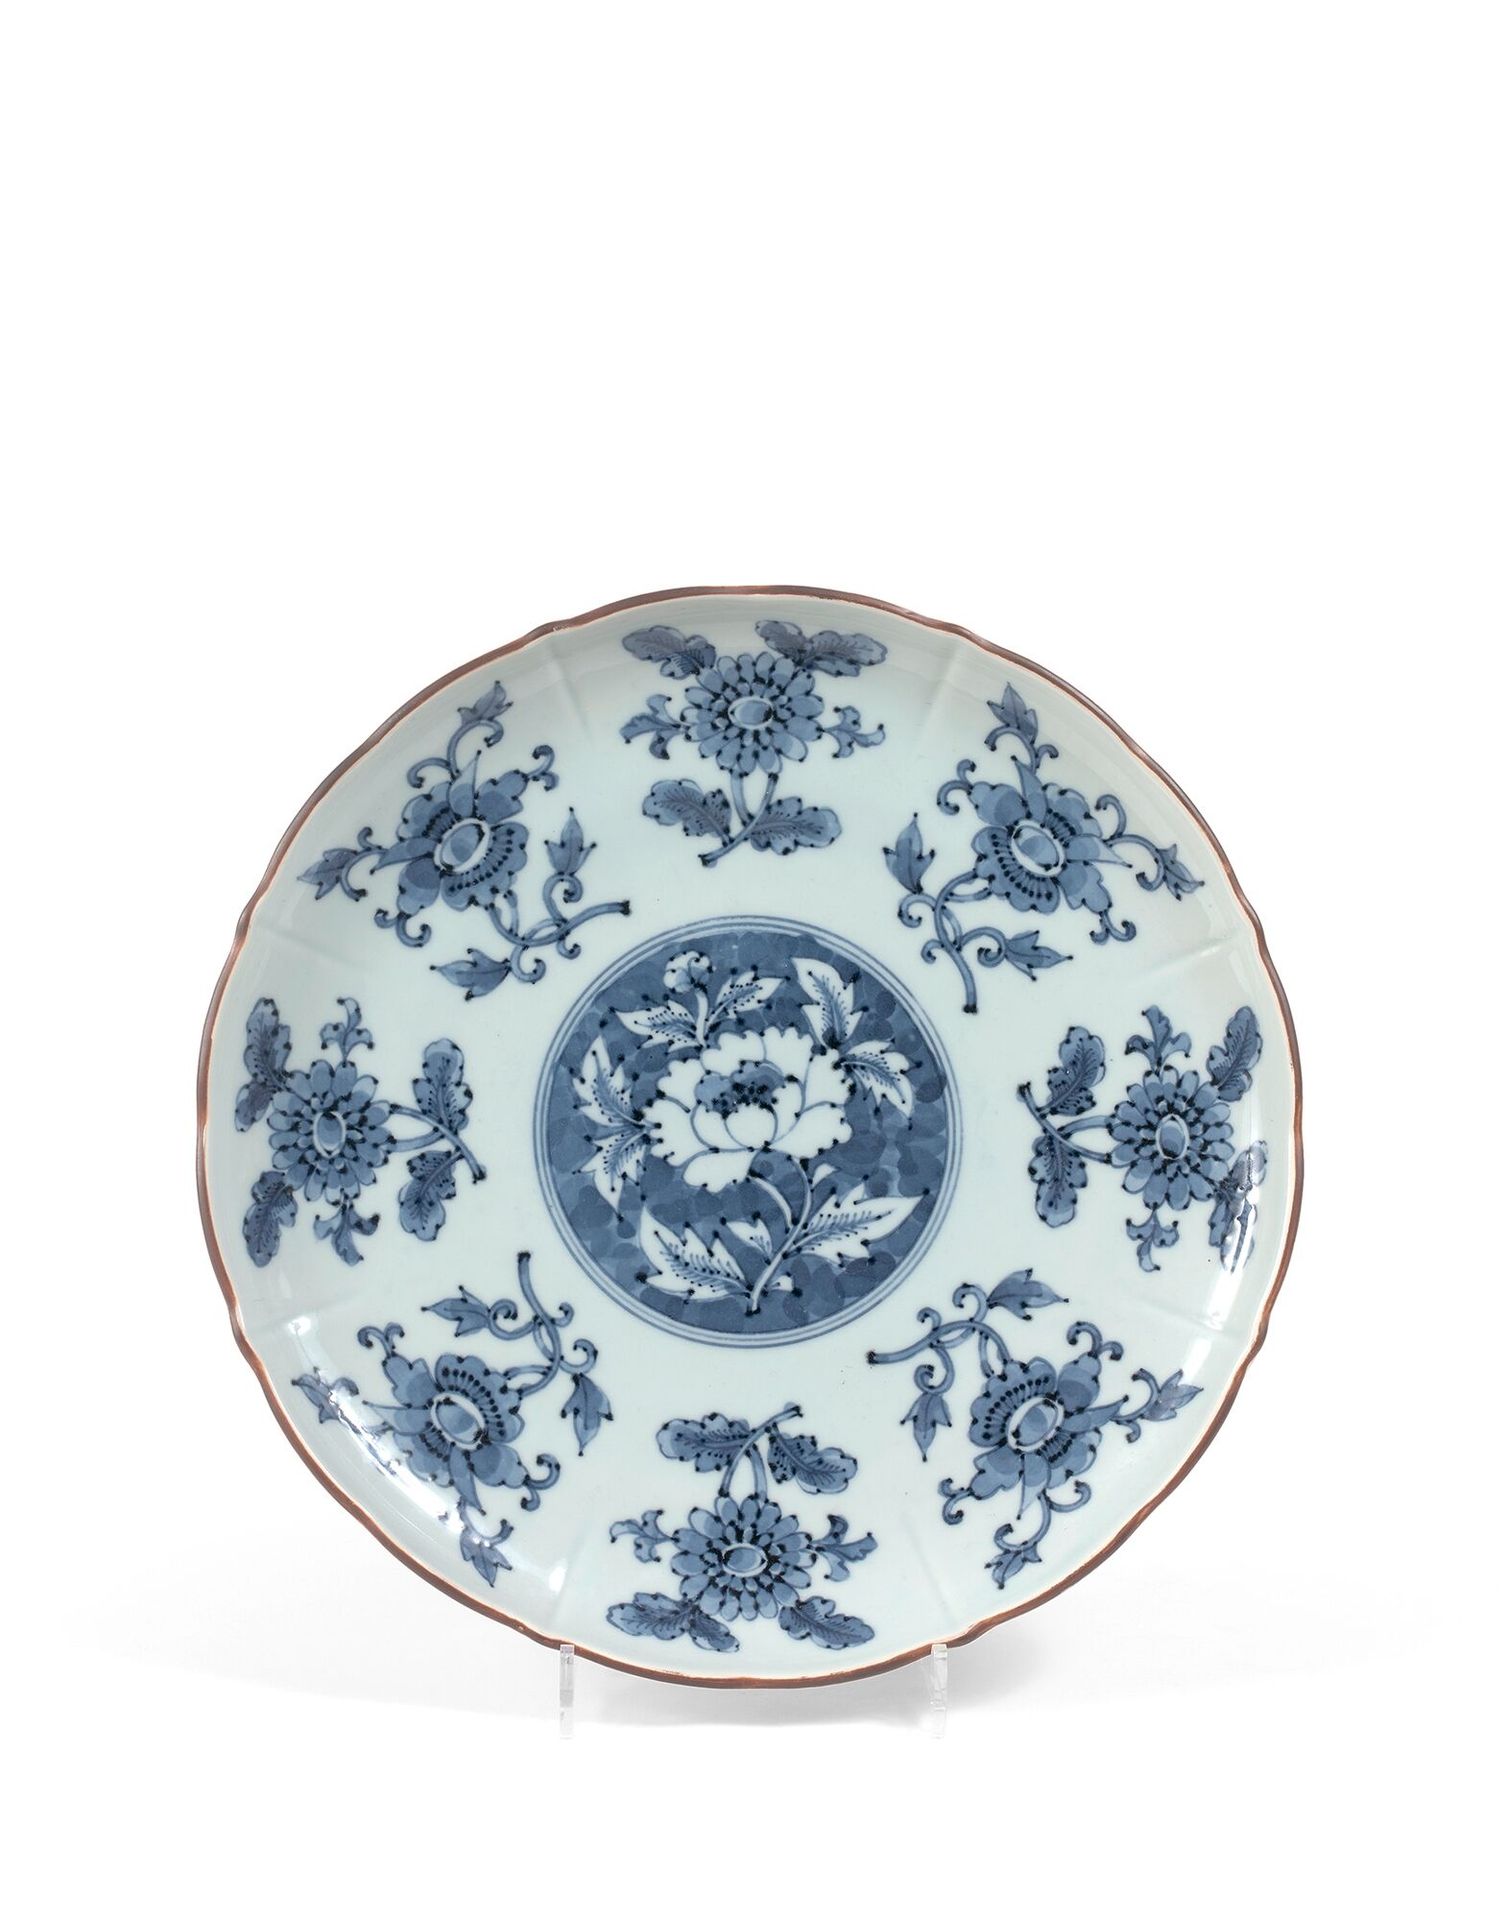 JAPON - XXe siècle Platte in polylobierter Form aus Porzellan, dekoriert in Unte&hellip;